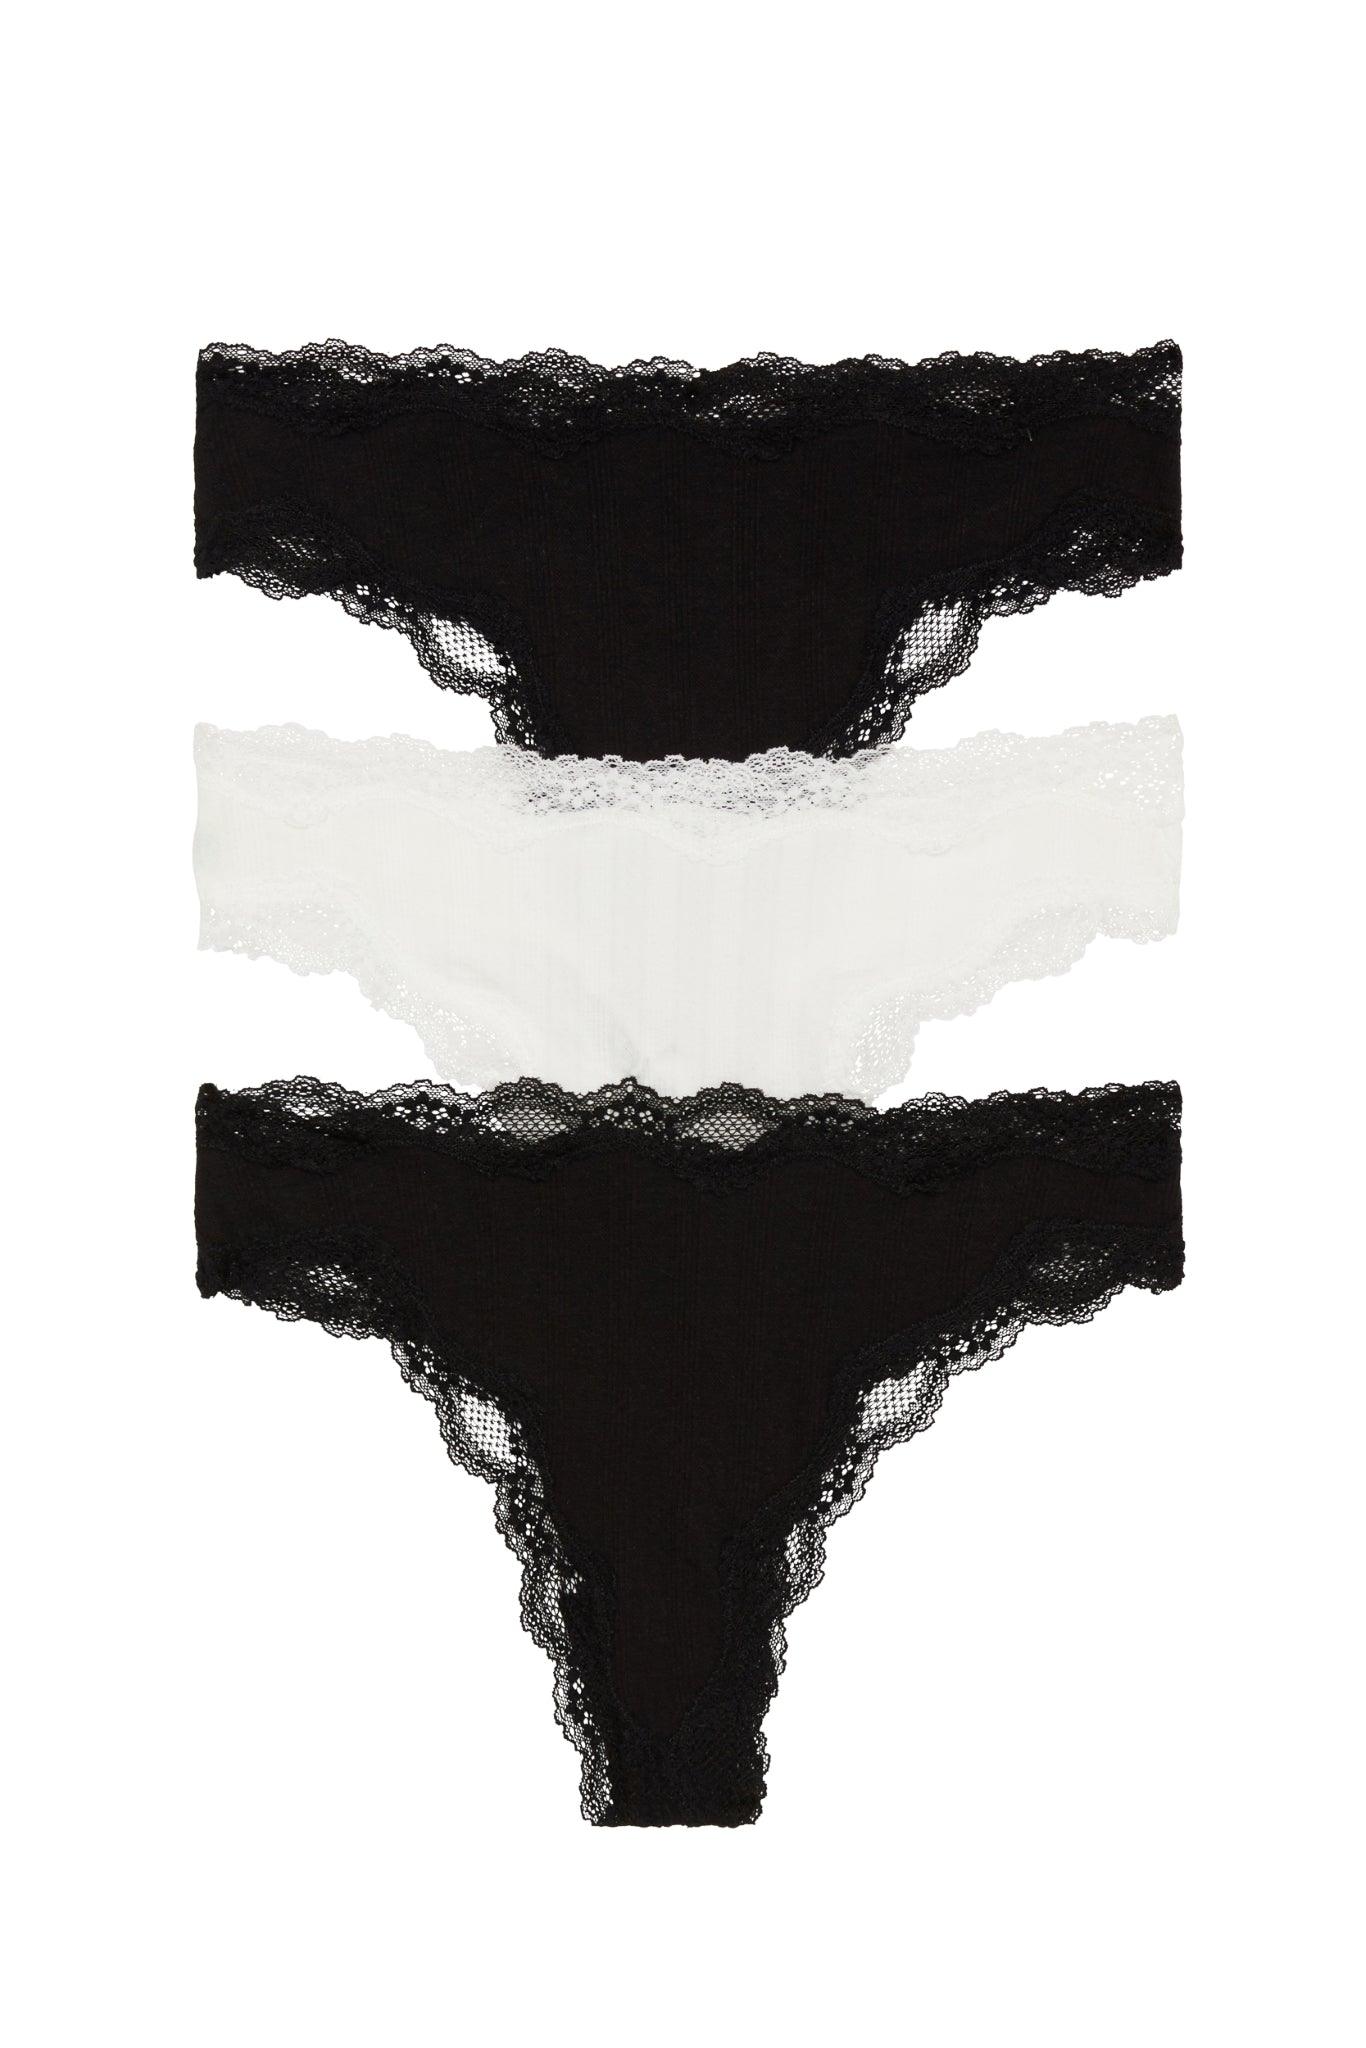 Lorelai Hi-Cut Thong 3 Pack - - Black/White/Black